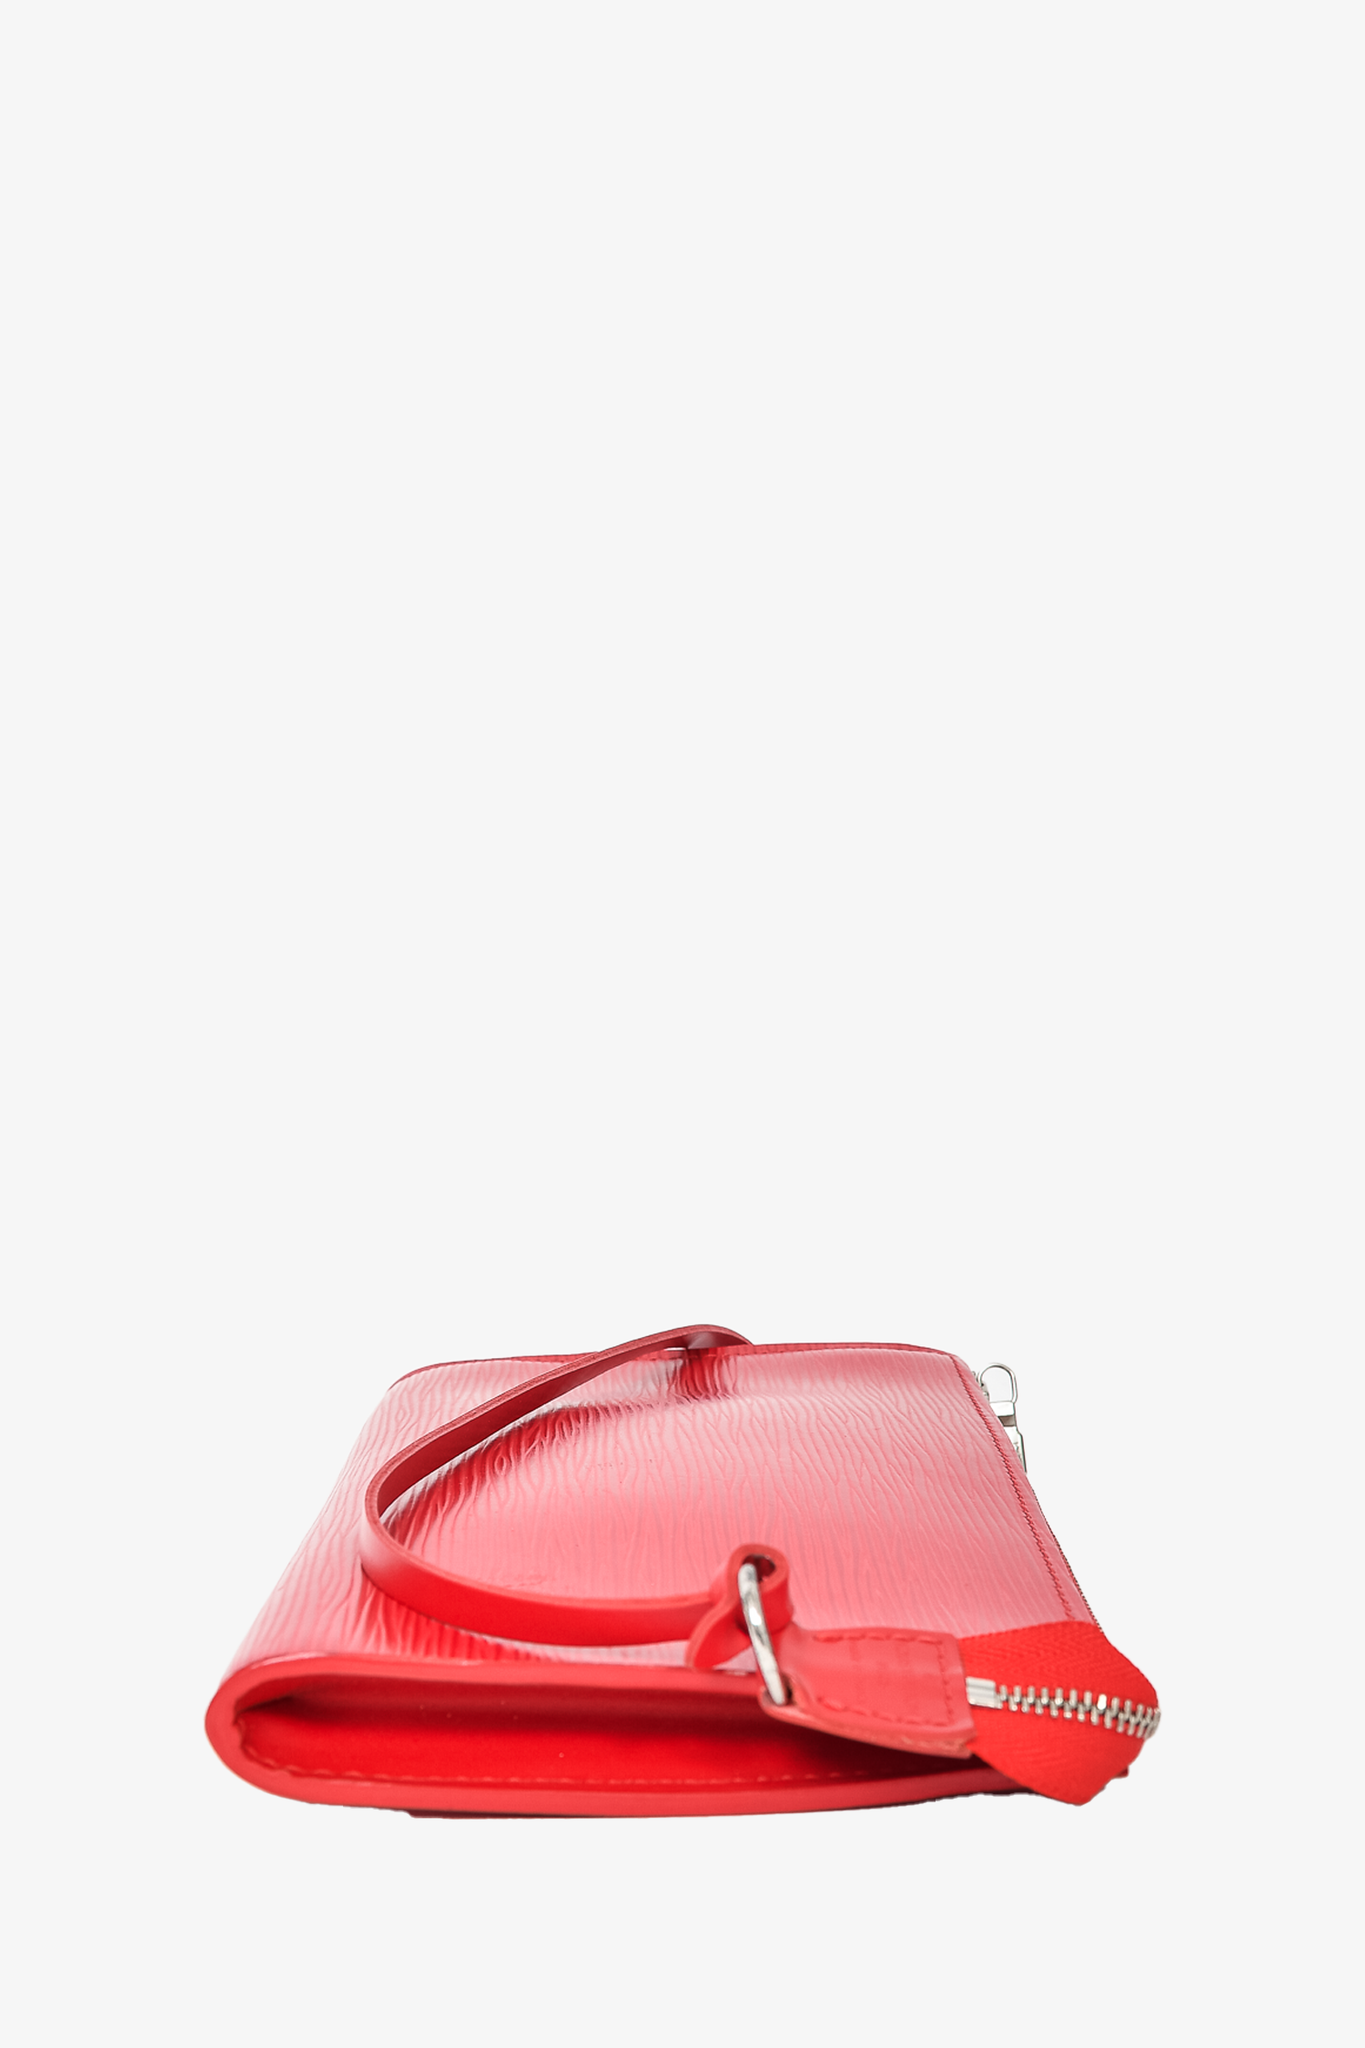 Louis Vuitton Red Epi Leather Pochette Accessories Wristlet Clutch